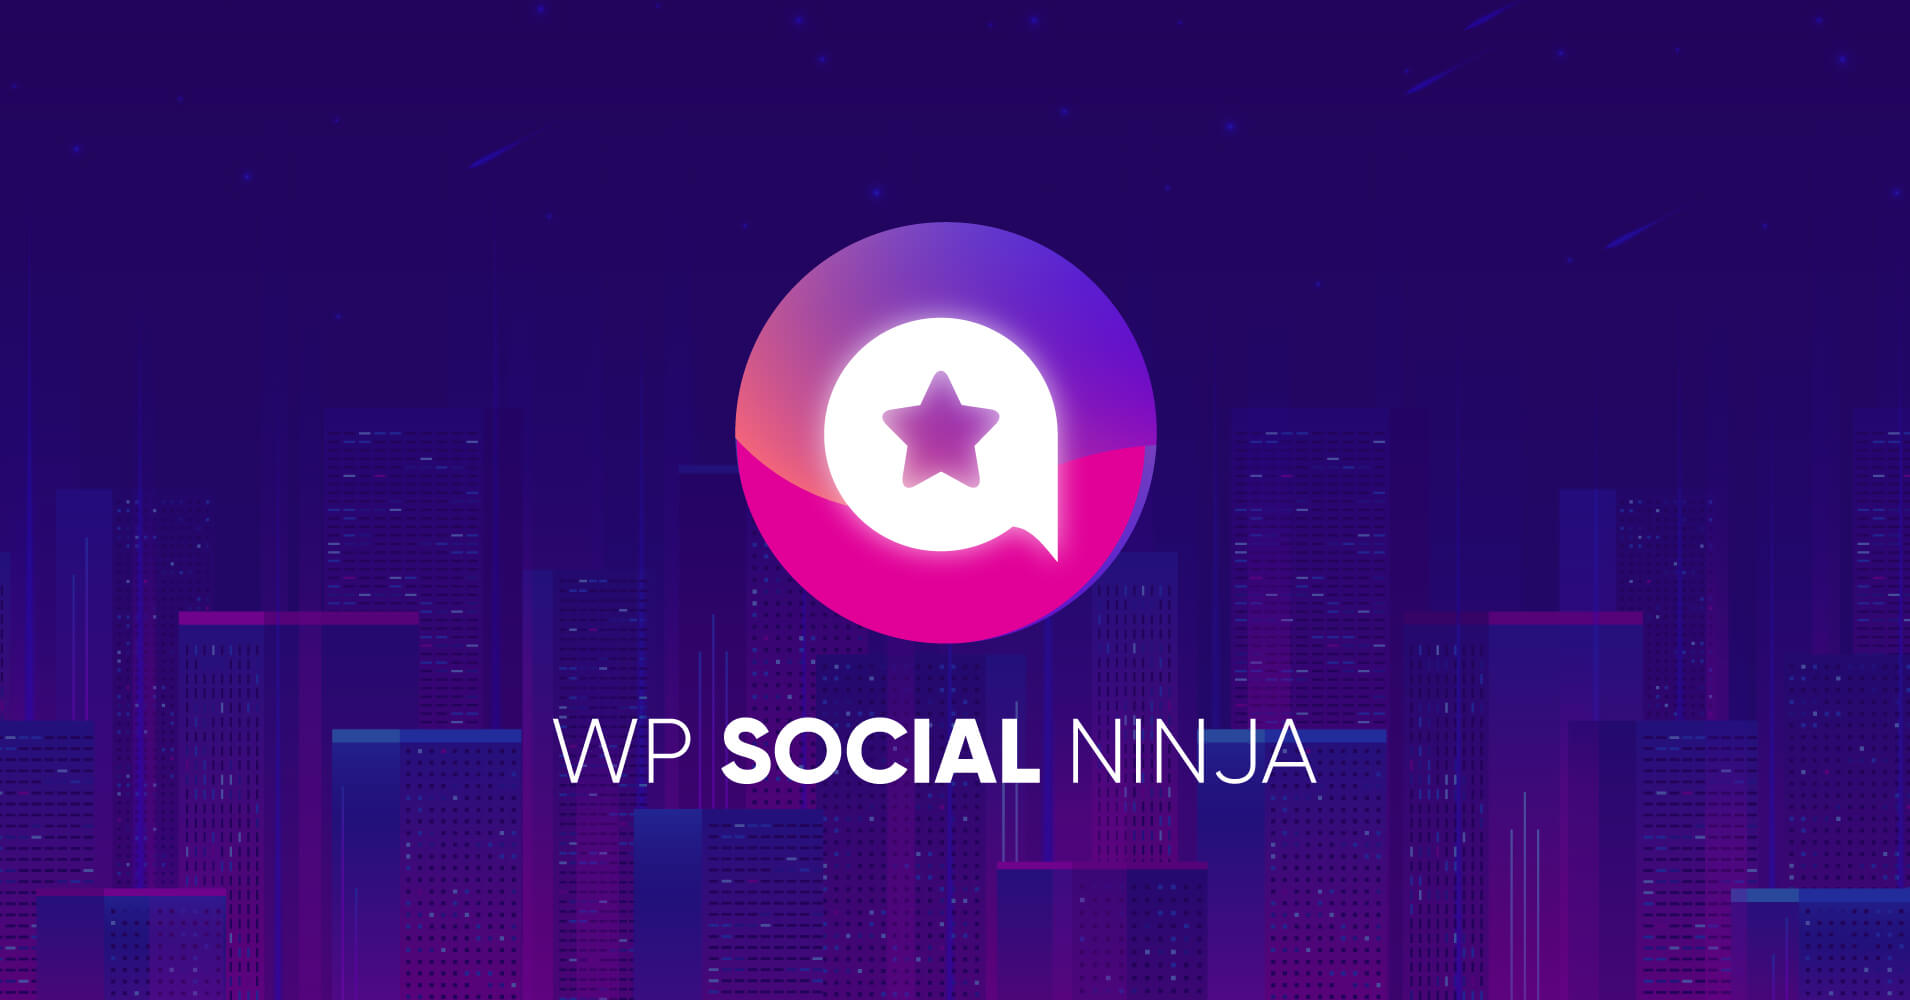 WP Social Ninja: The Ultimate Social Feeds, Reviews, and Chats Plugin for WordPress